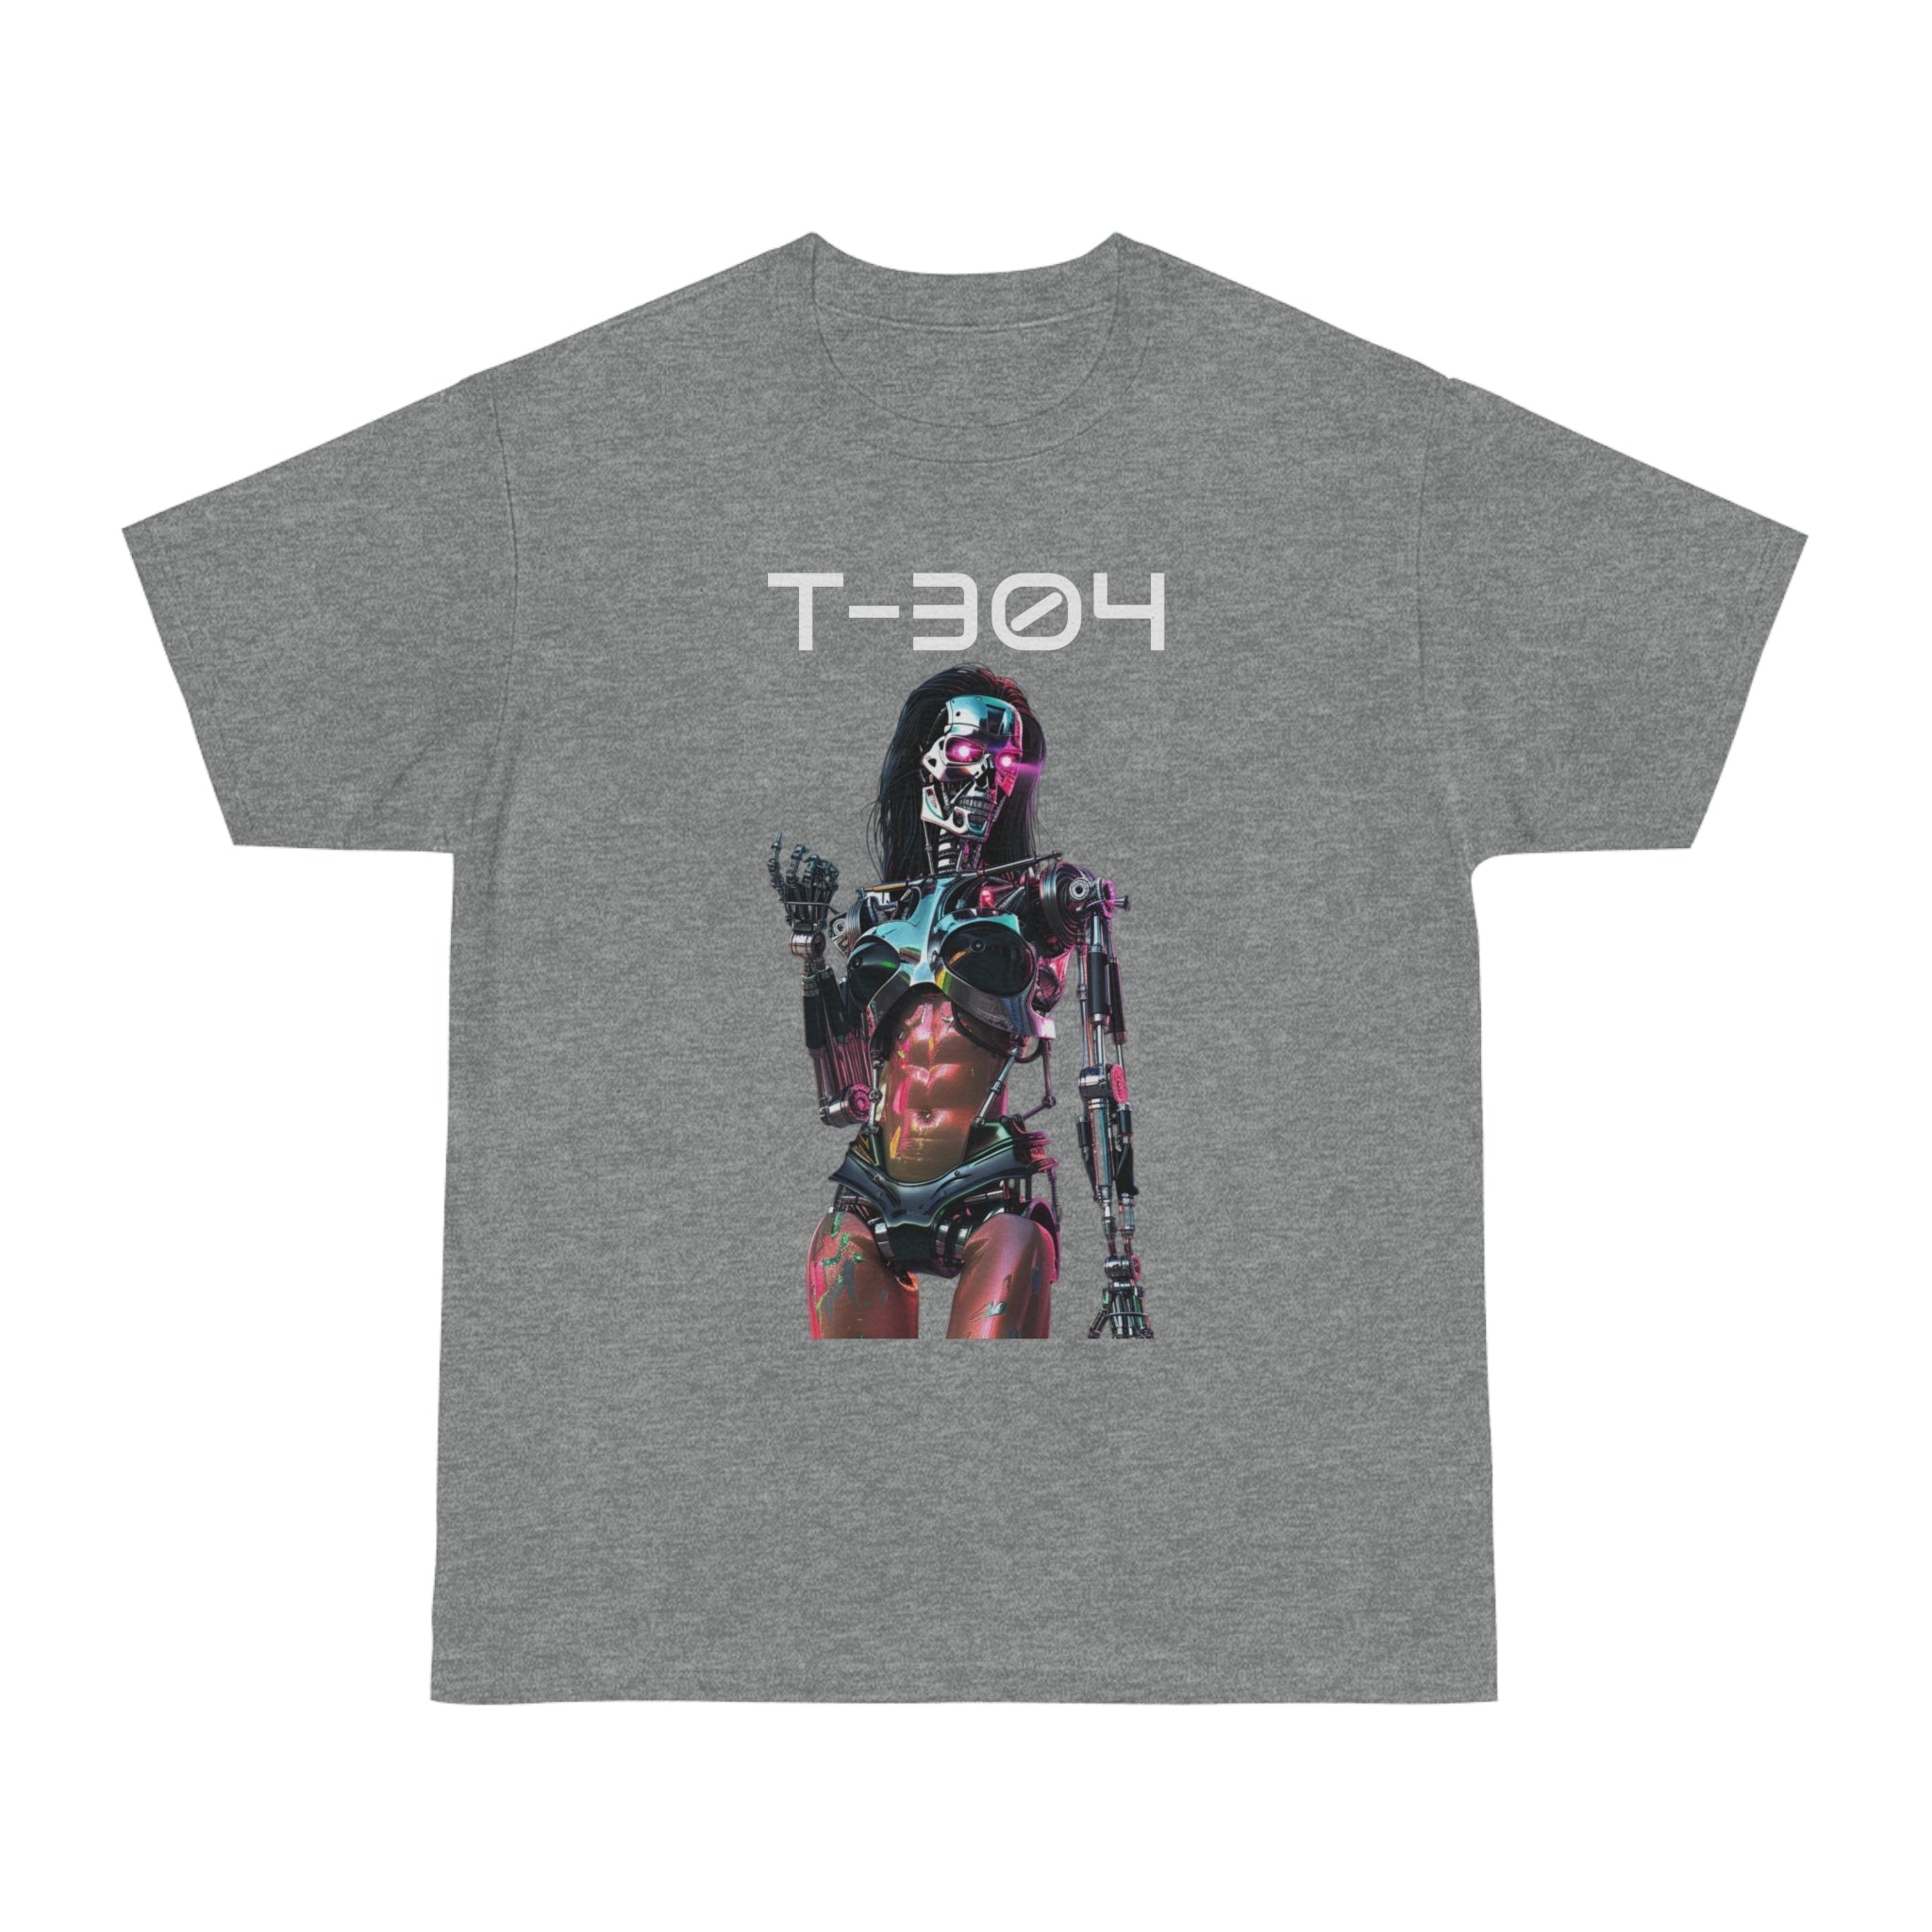 Future Chic: Retro Sci-Fi T-304 'On-Fleek Terminator' Inspired Glam Gal Unisex Hammer™ T-Shirt - Vintage Vibe, Modern Edge